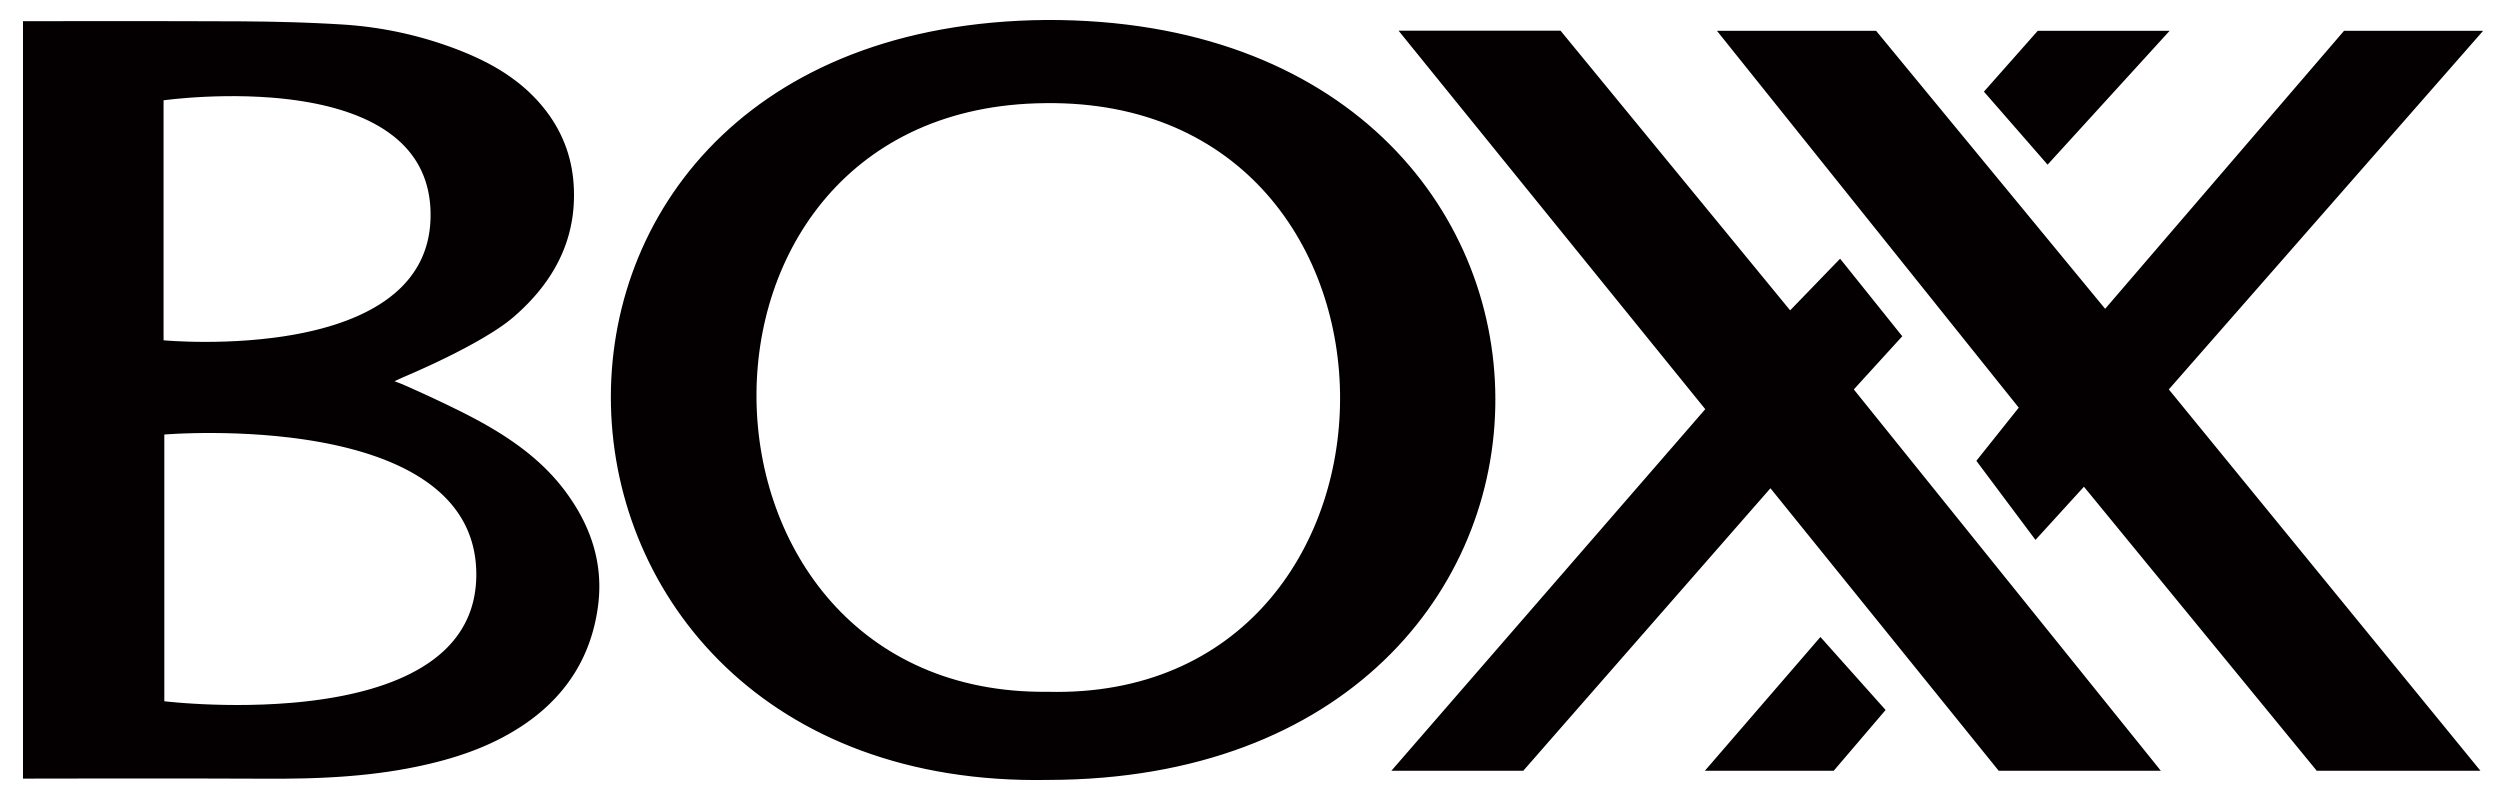 boxx logo vector Reverse | ACG Austin/San Antonio Growth Awards